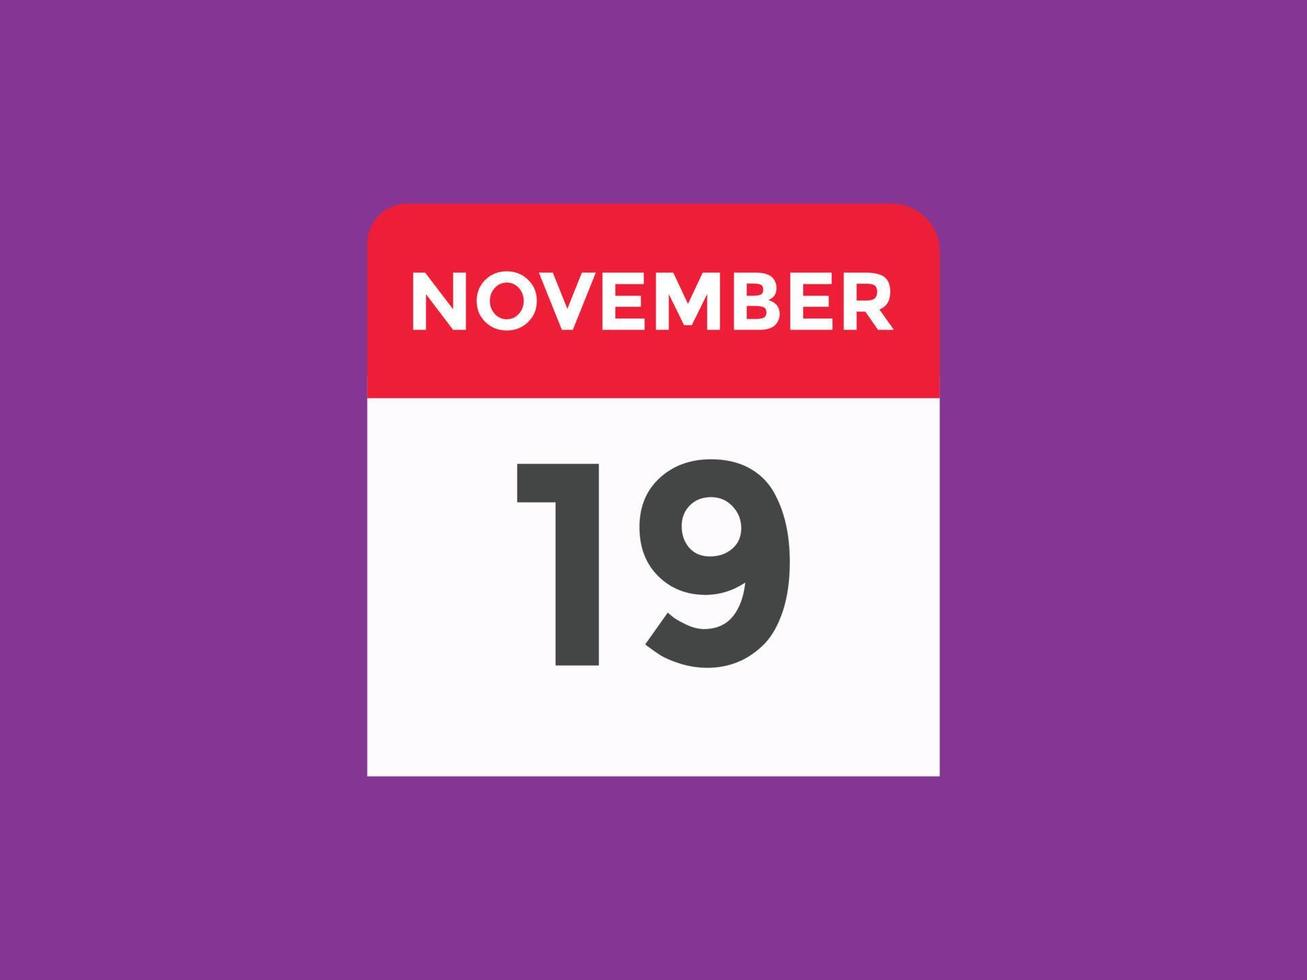 november 19 kalender herinnering. 19e november dagelijks kalender icoon sjabloon. kalender 19e november icoon ontwerp sjabloon. vector illustratie